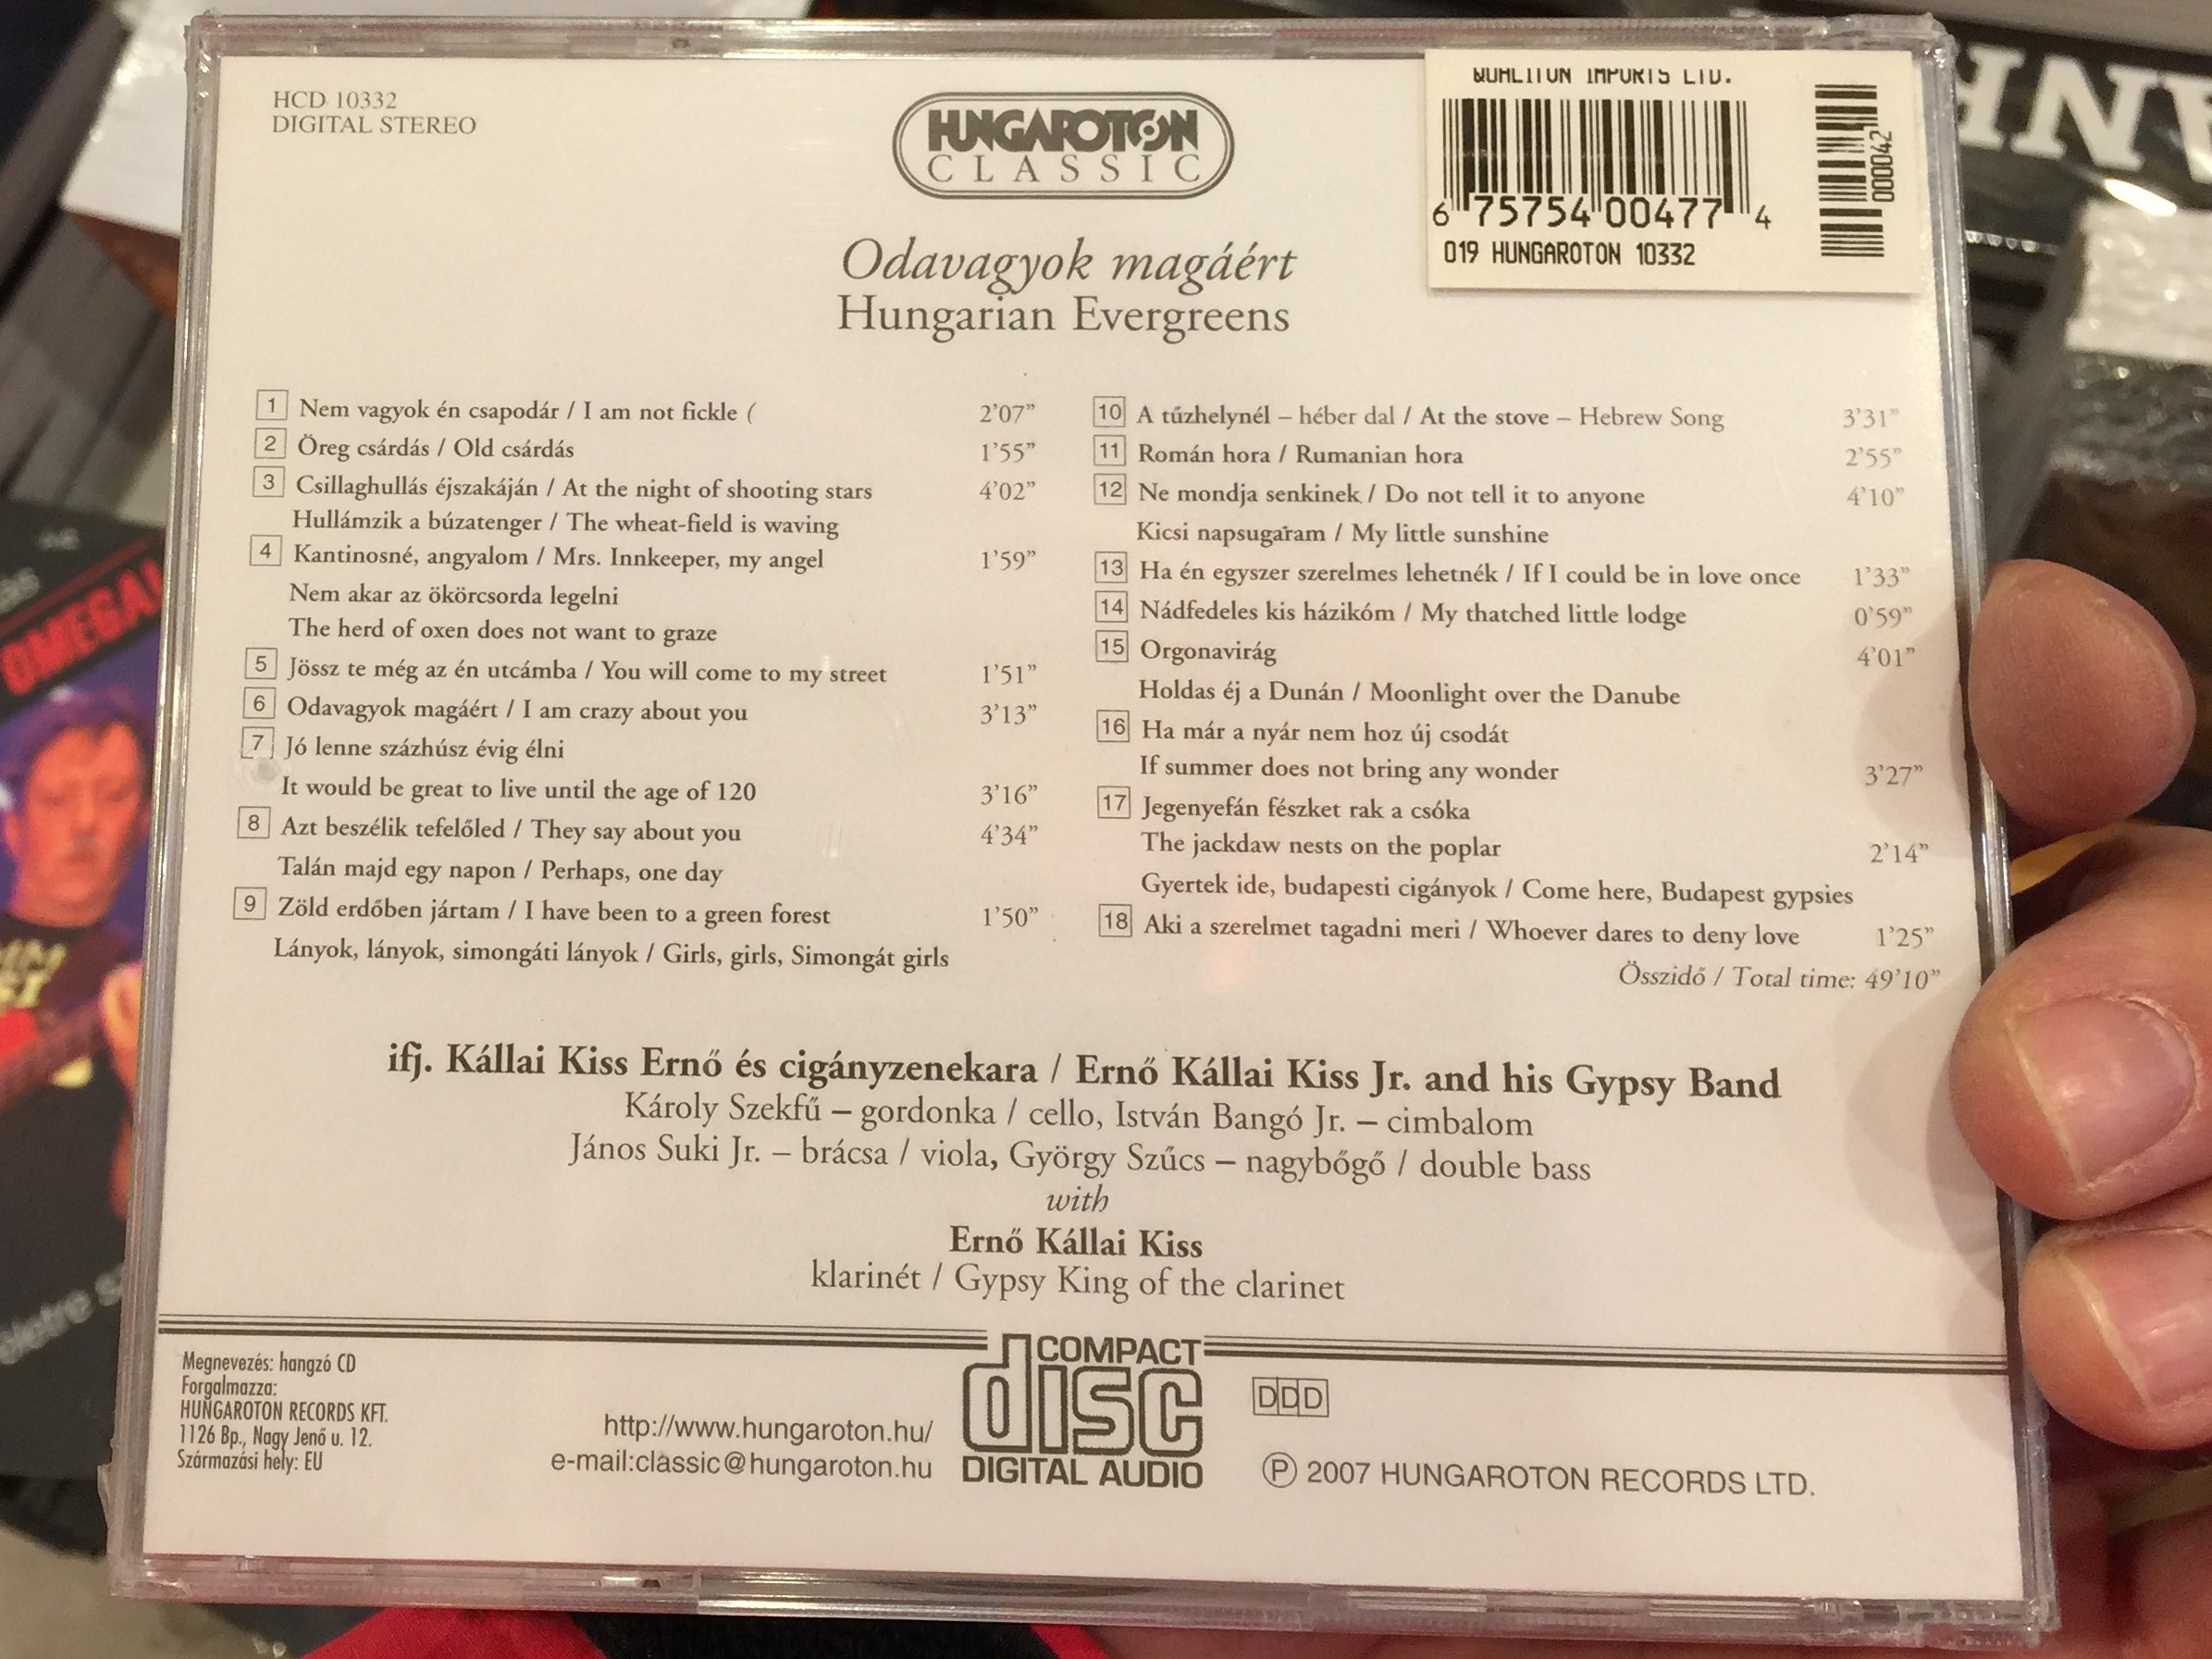 odavagyok-magaert...-hungarian-evergreens-erno-kallai-kiss-jr.-and-his-gypsy-band-hungaroton-classic-audio-cd-2007-stereo-hcd-10332-2-.jpg